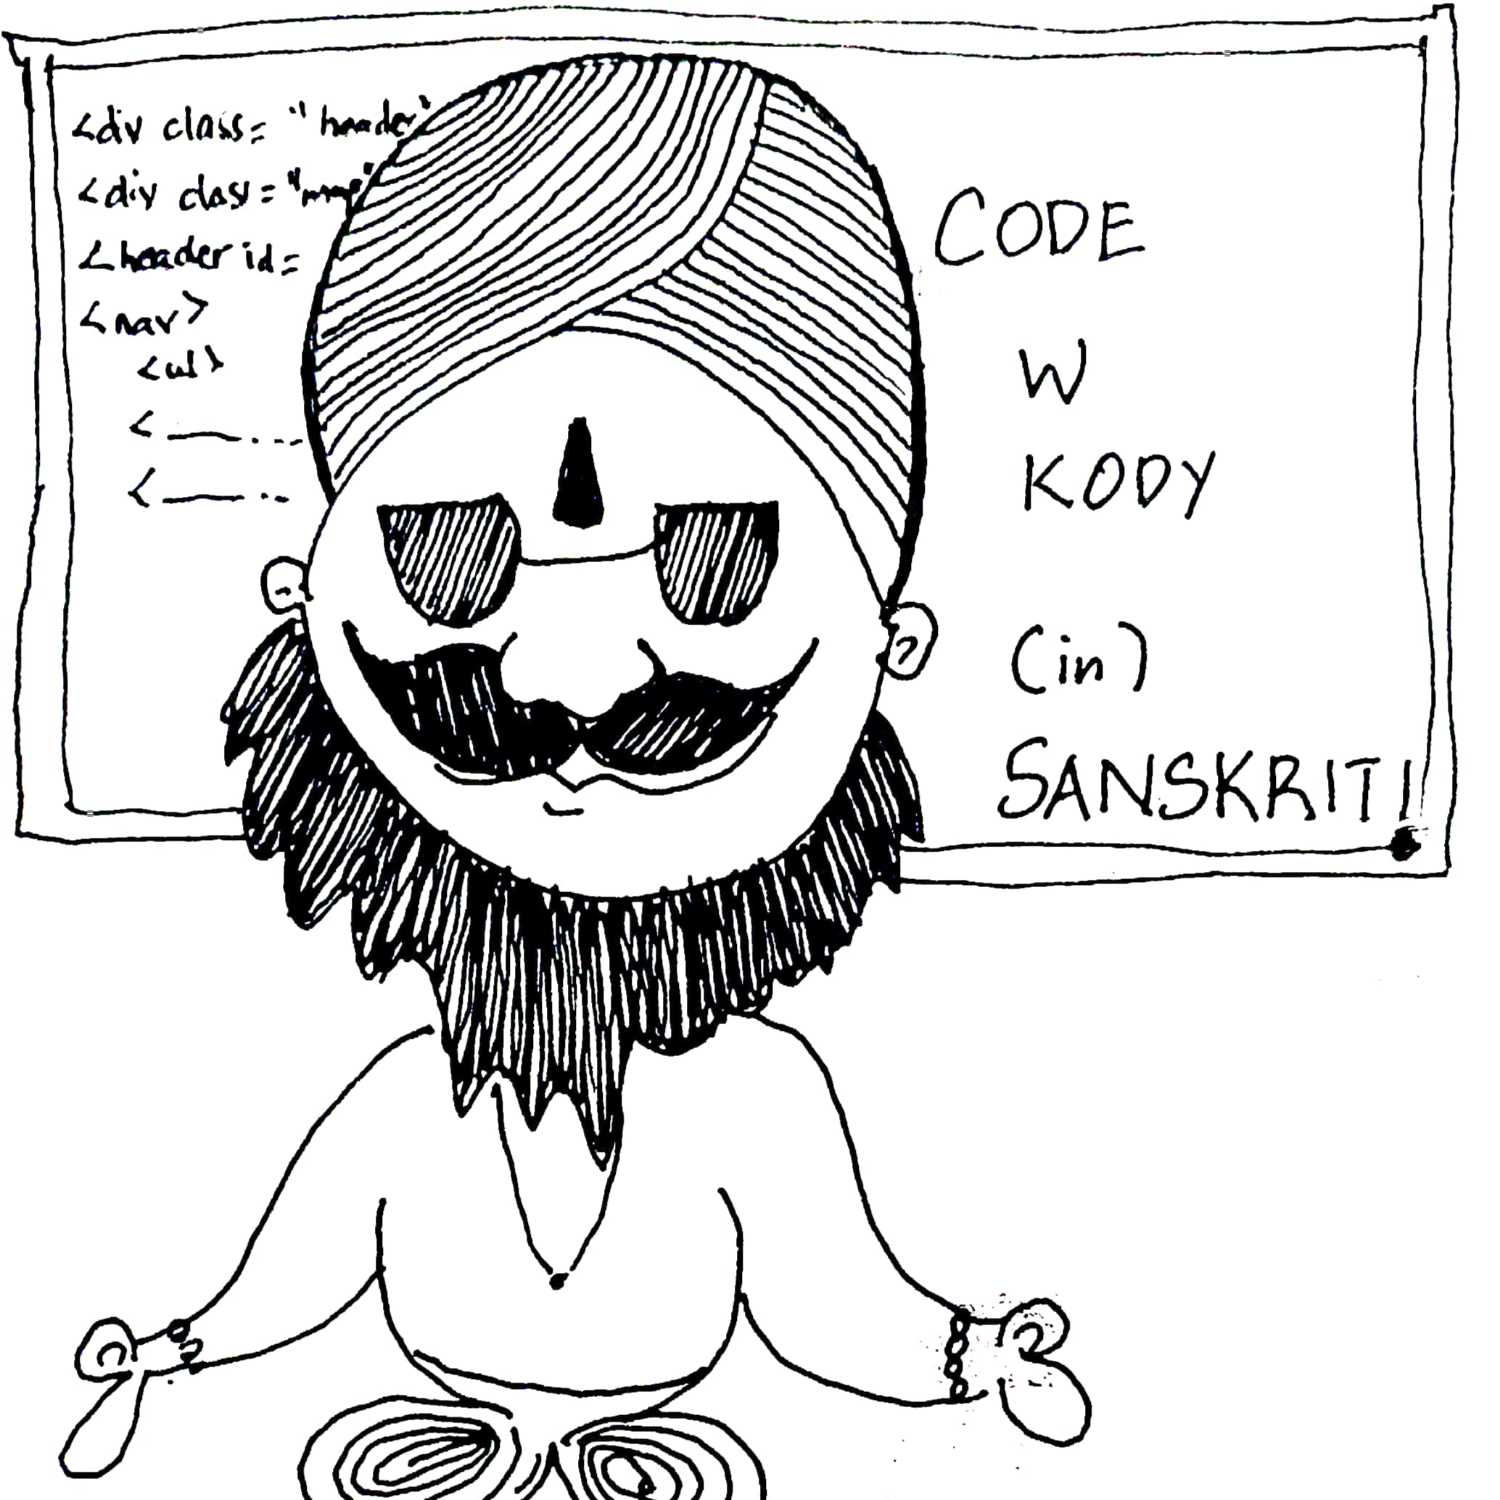 S2#1 - Code with Kody (in Sanskrit)